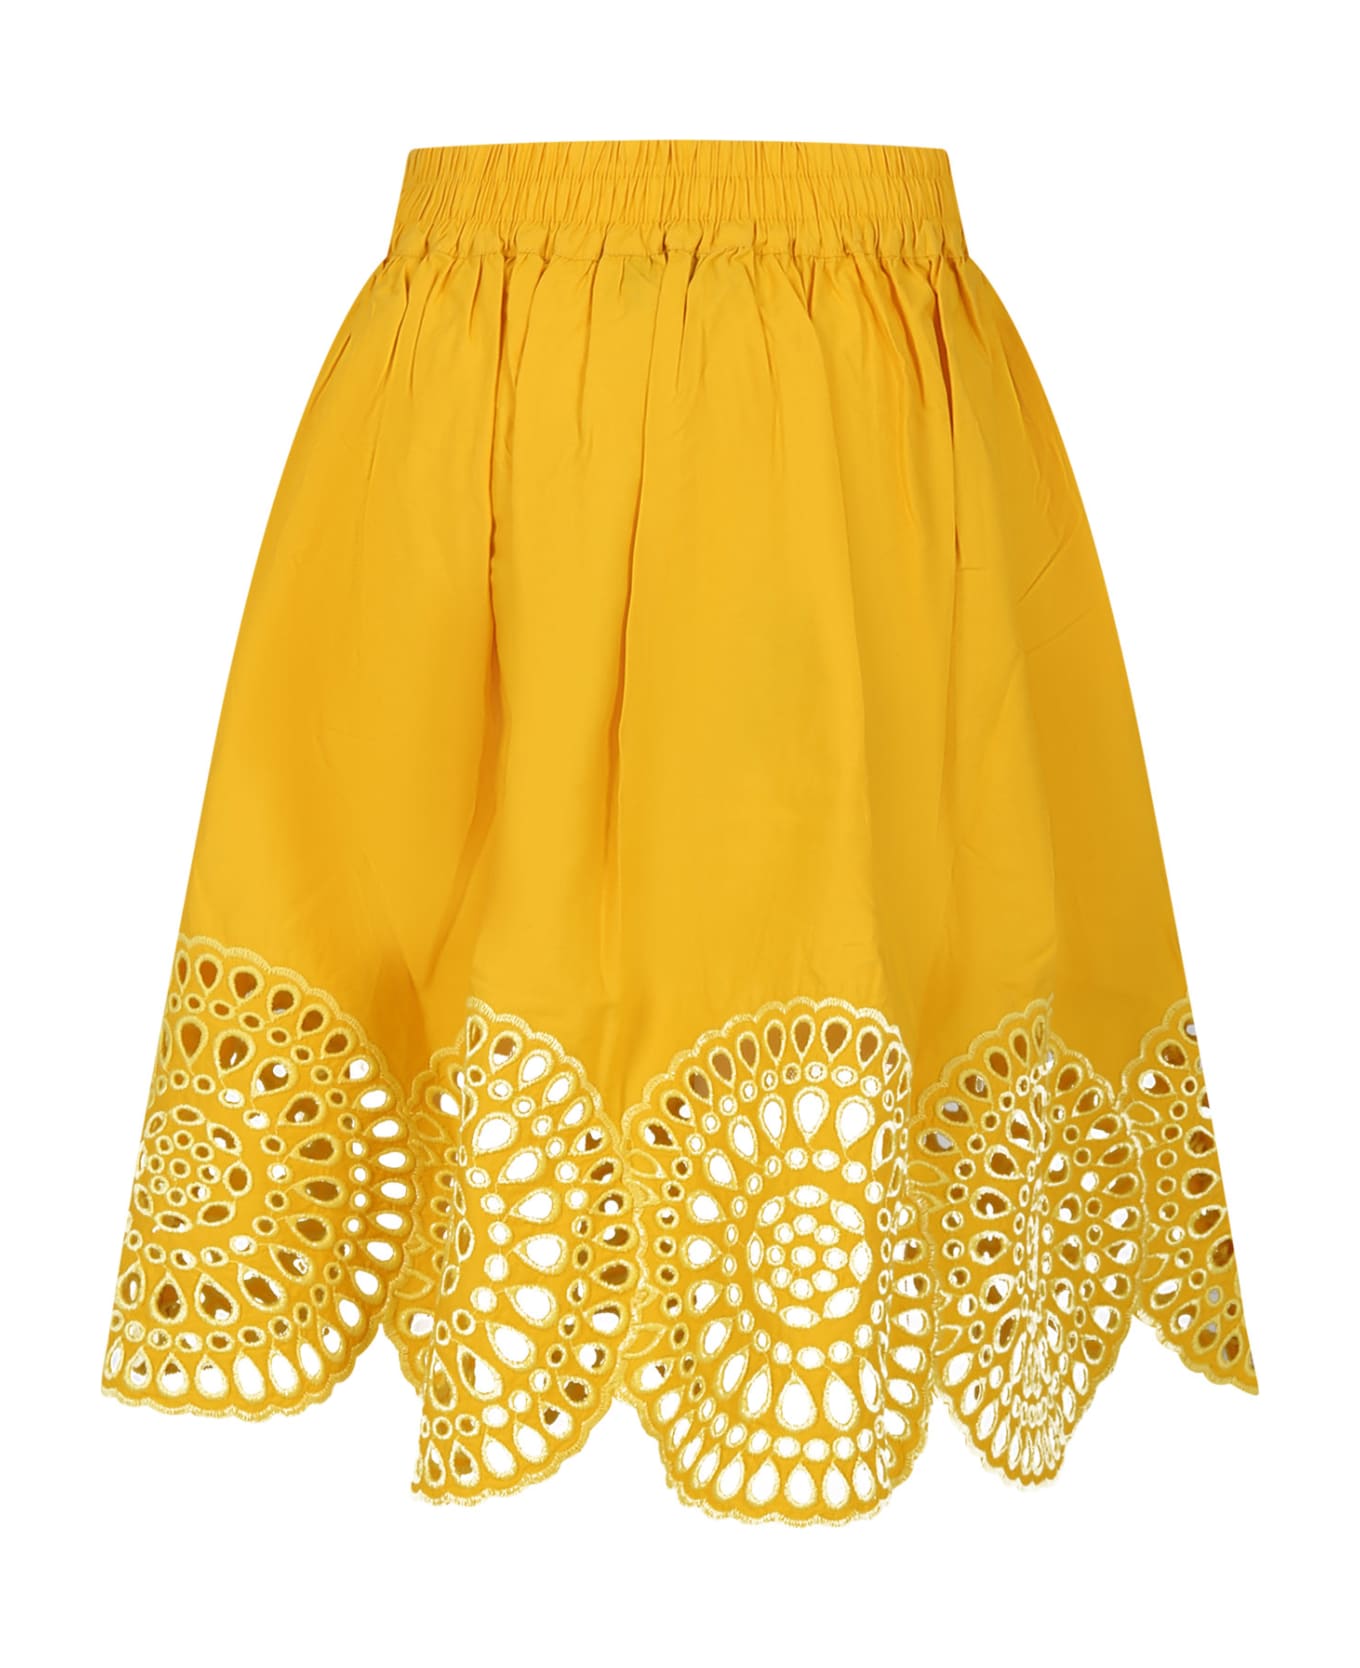 Stella McCartney Kids Yellow Skirt For Girl With Macramé Lace. - Yellow